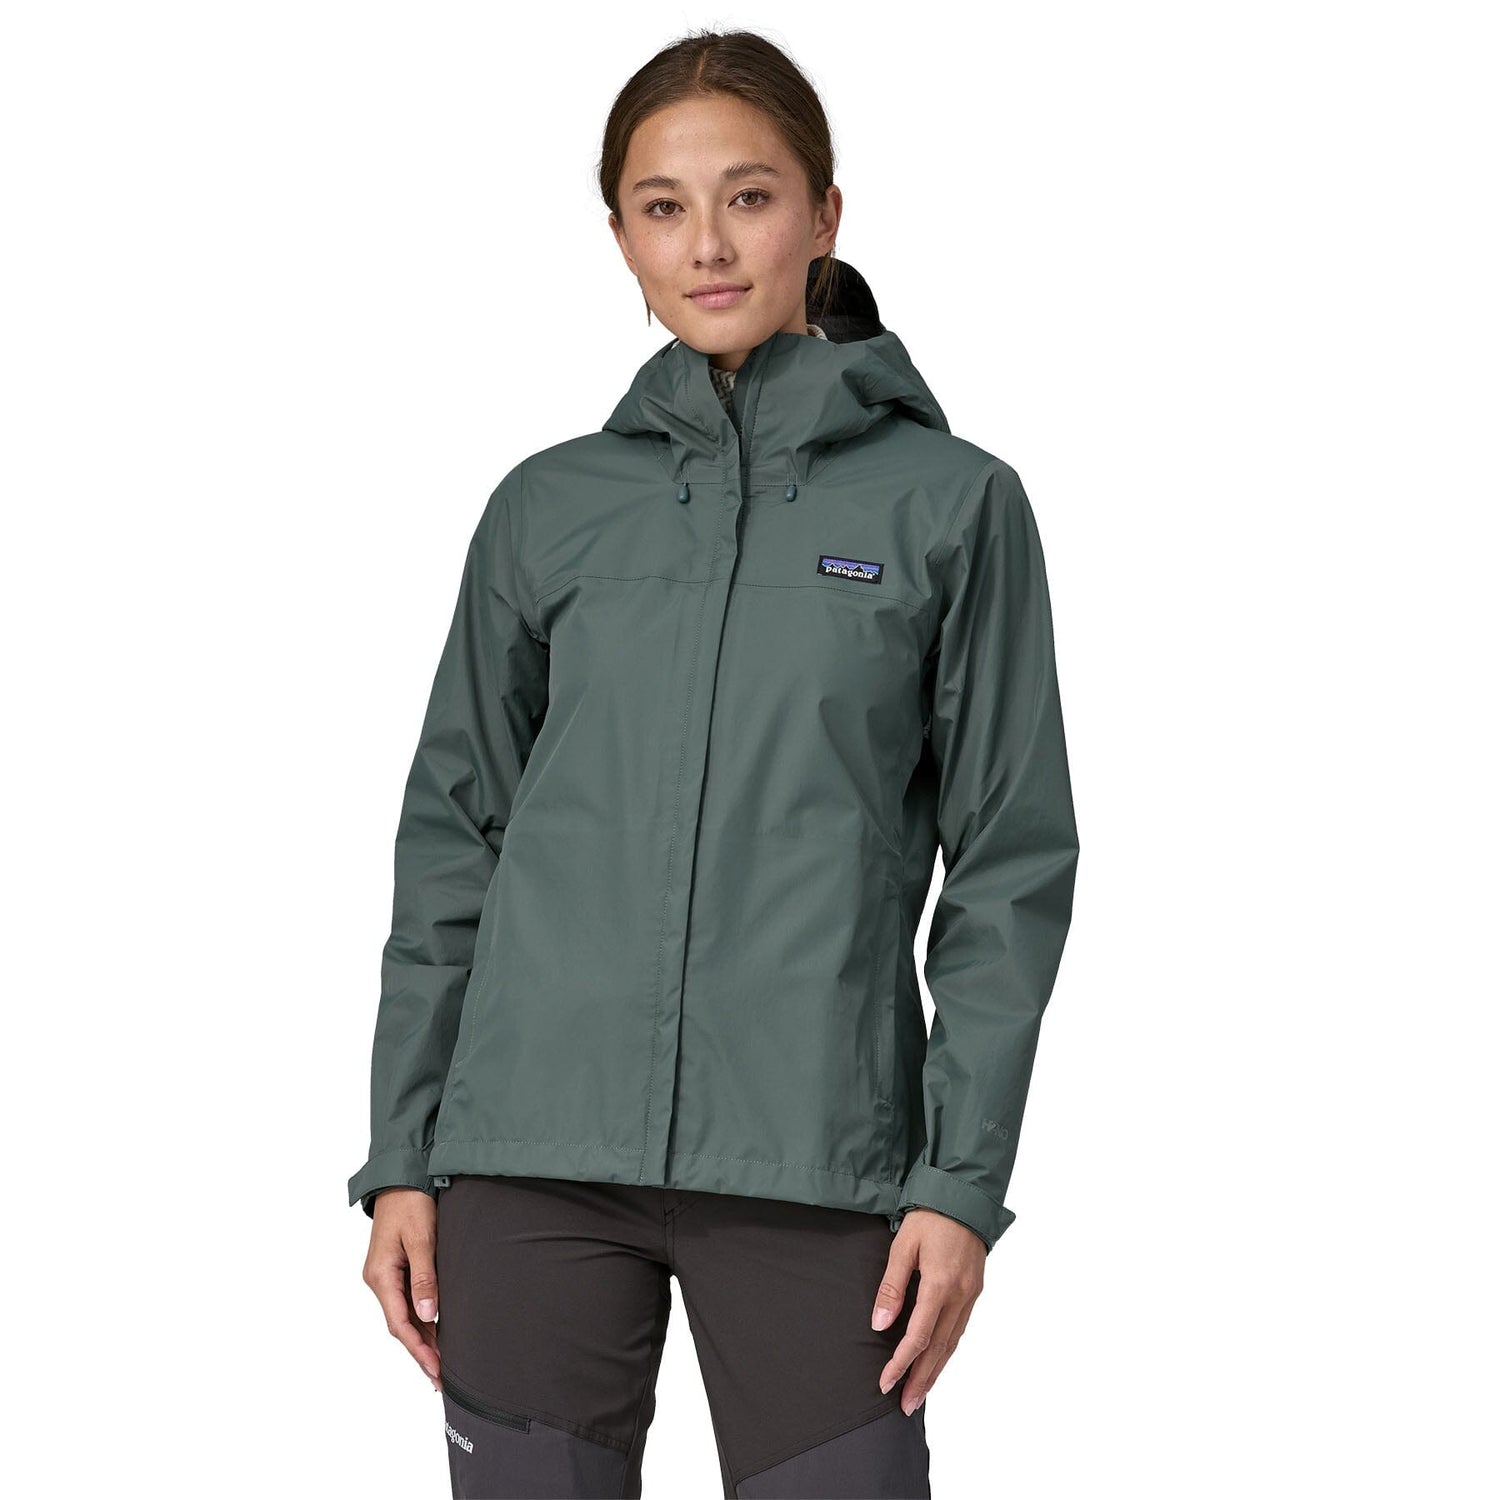 Patagonia W's Torrentshell 3L Jacket - 100% Recycled Nylon Nouveau Green Jacket